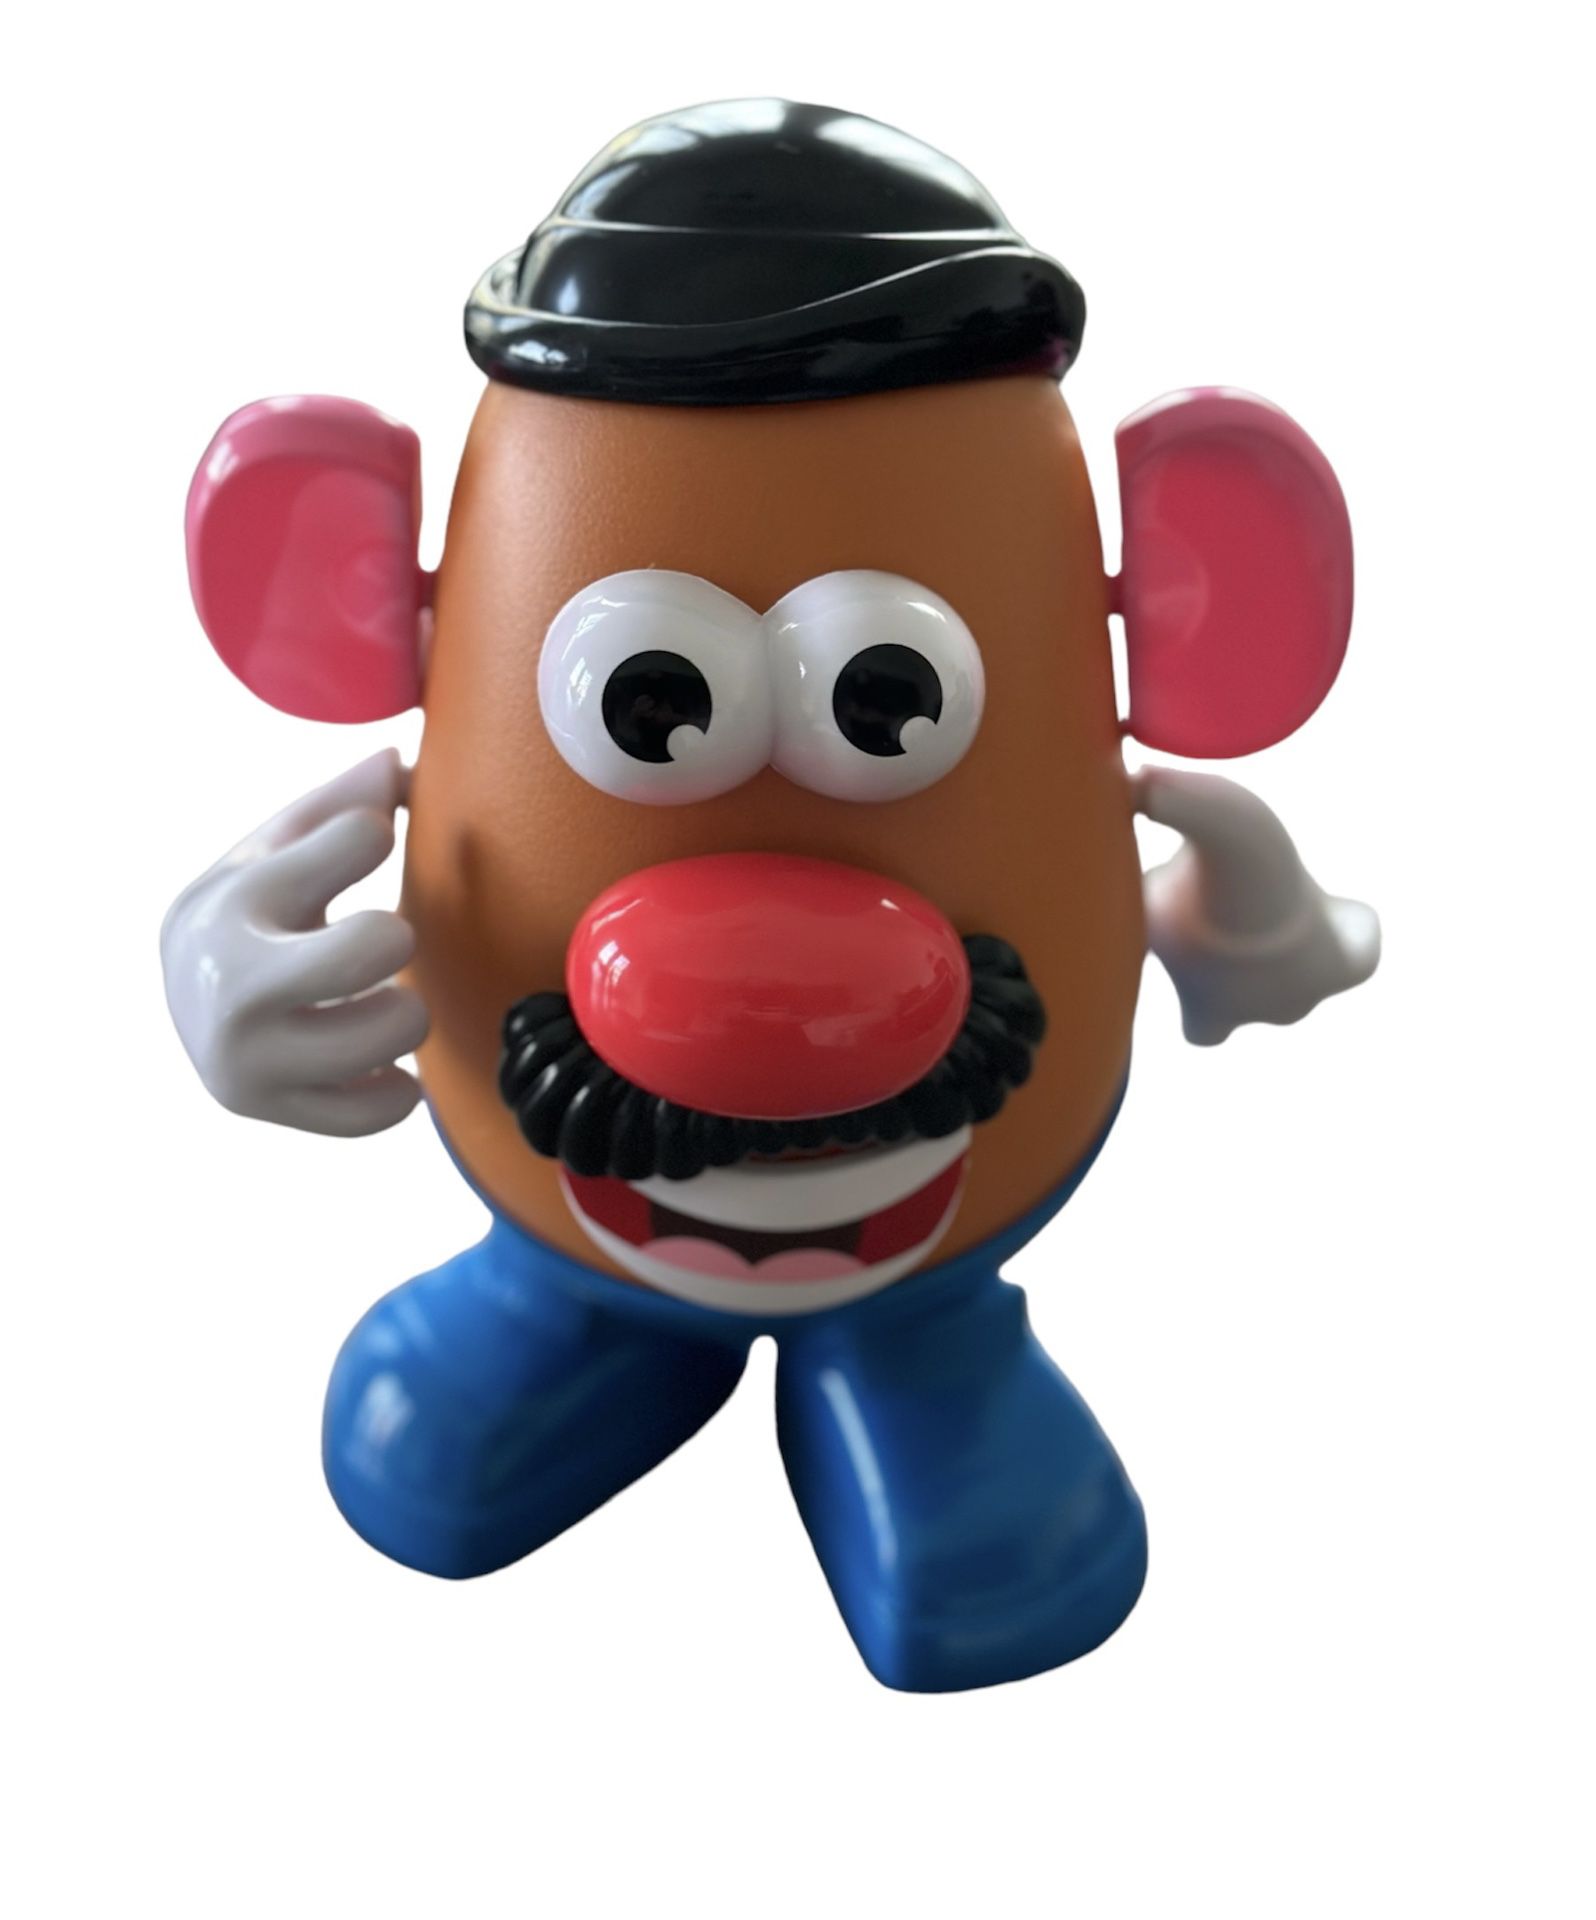 Potato Head toy.